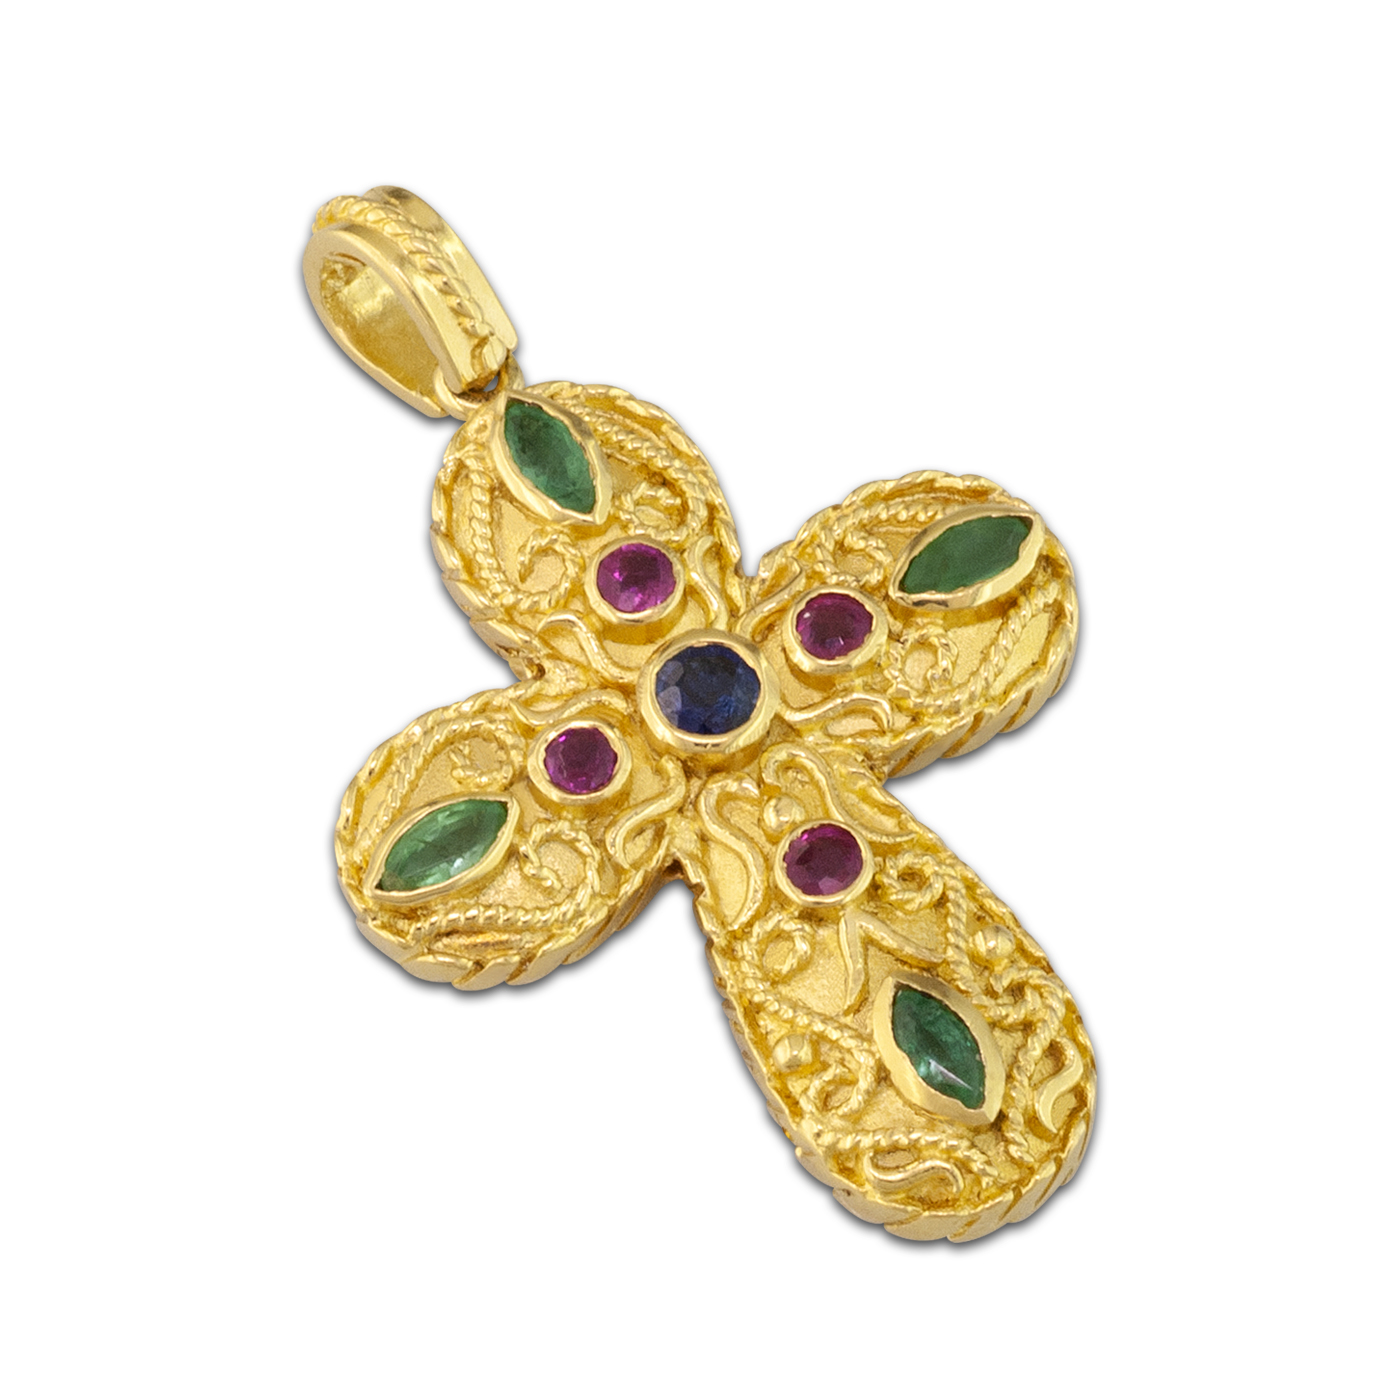 Byzantine gold Cross with precious stones